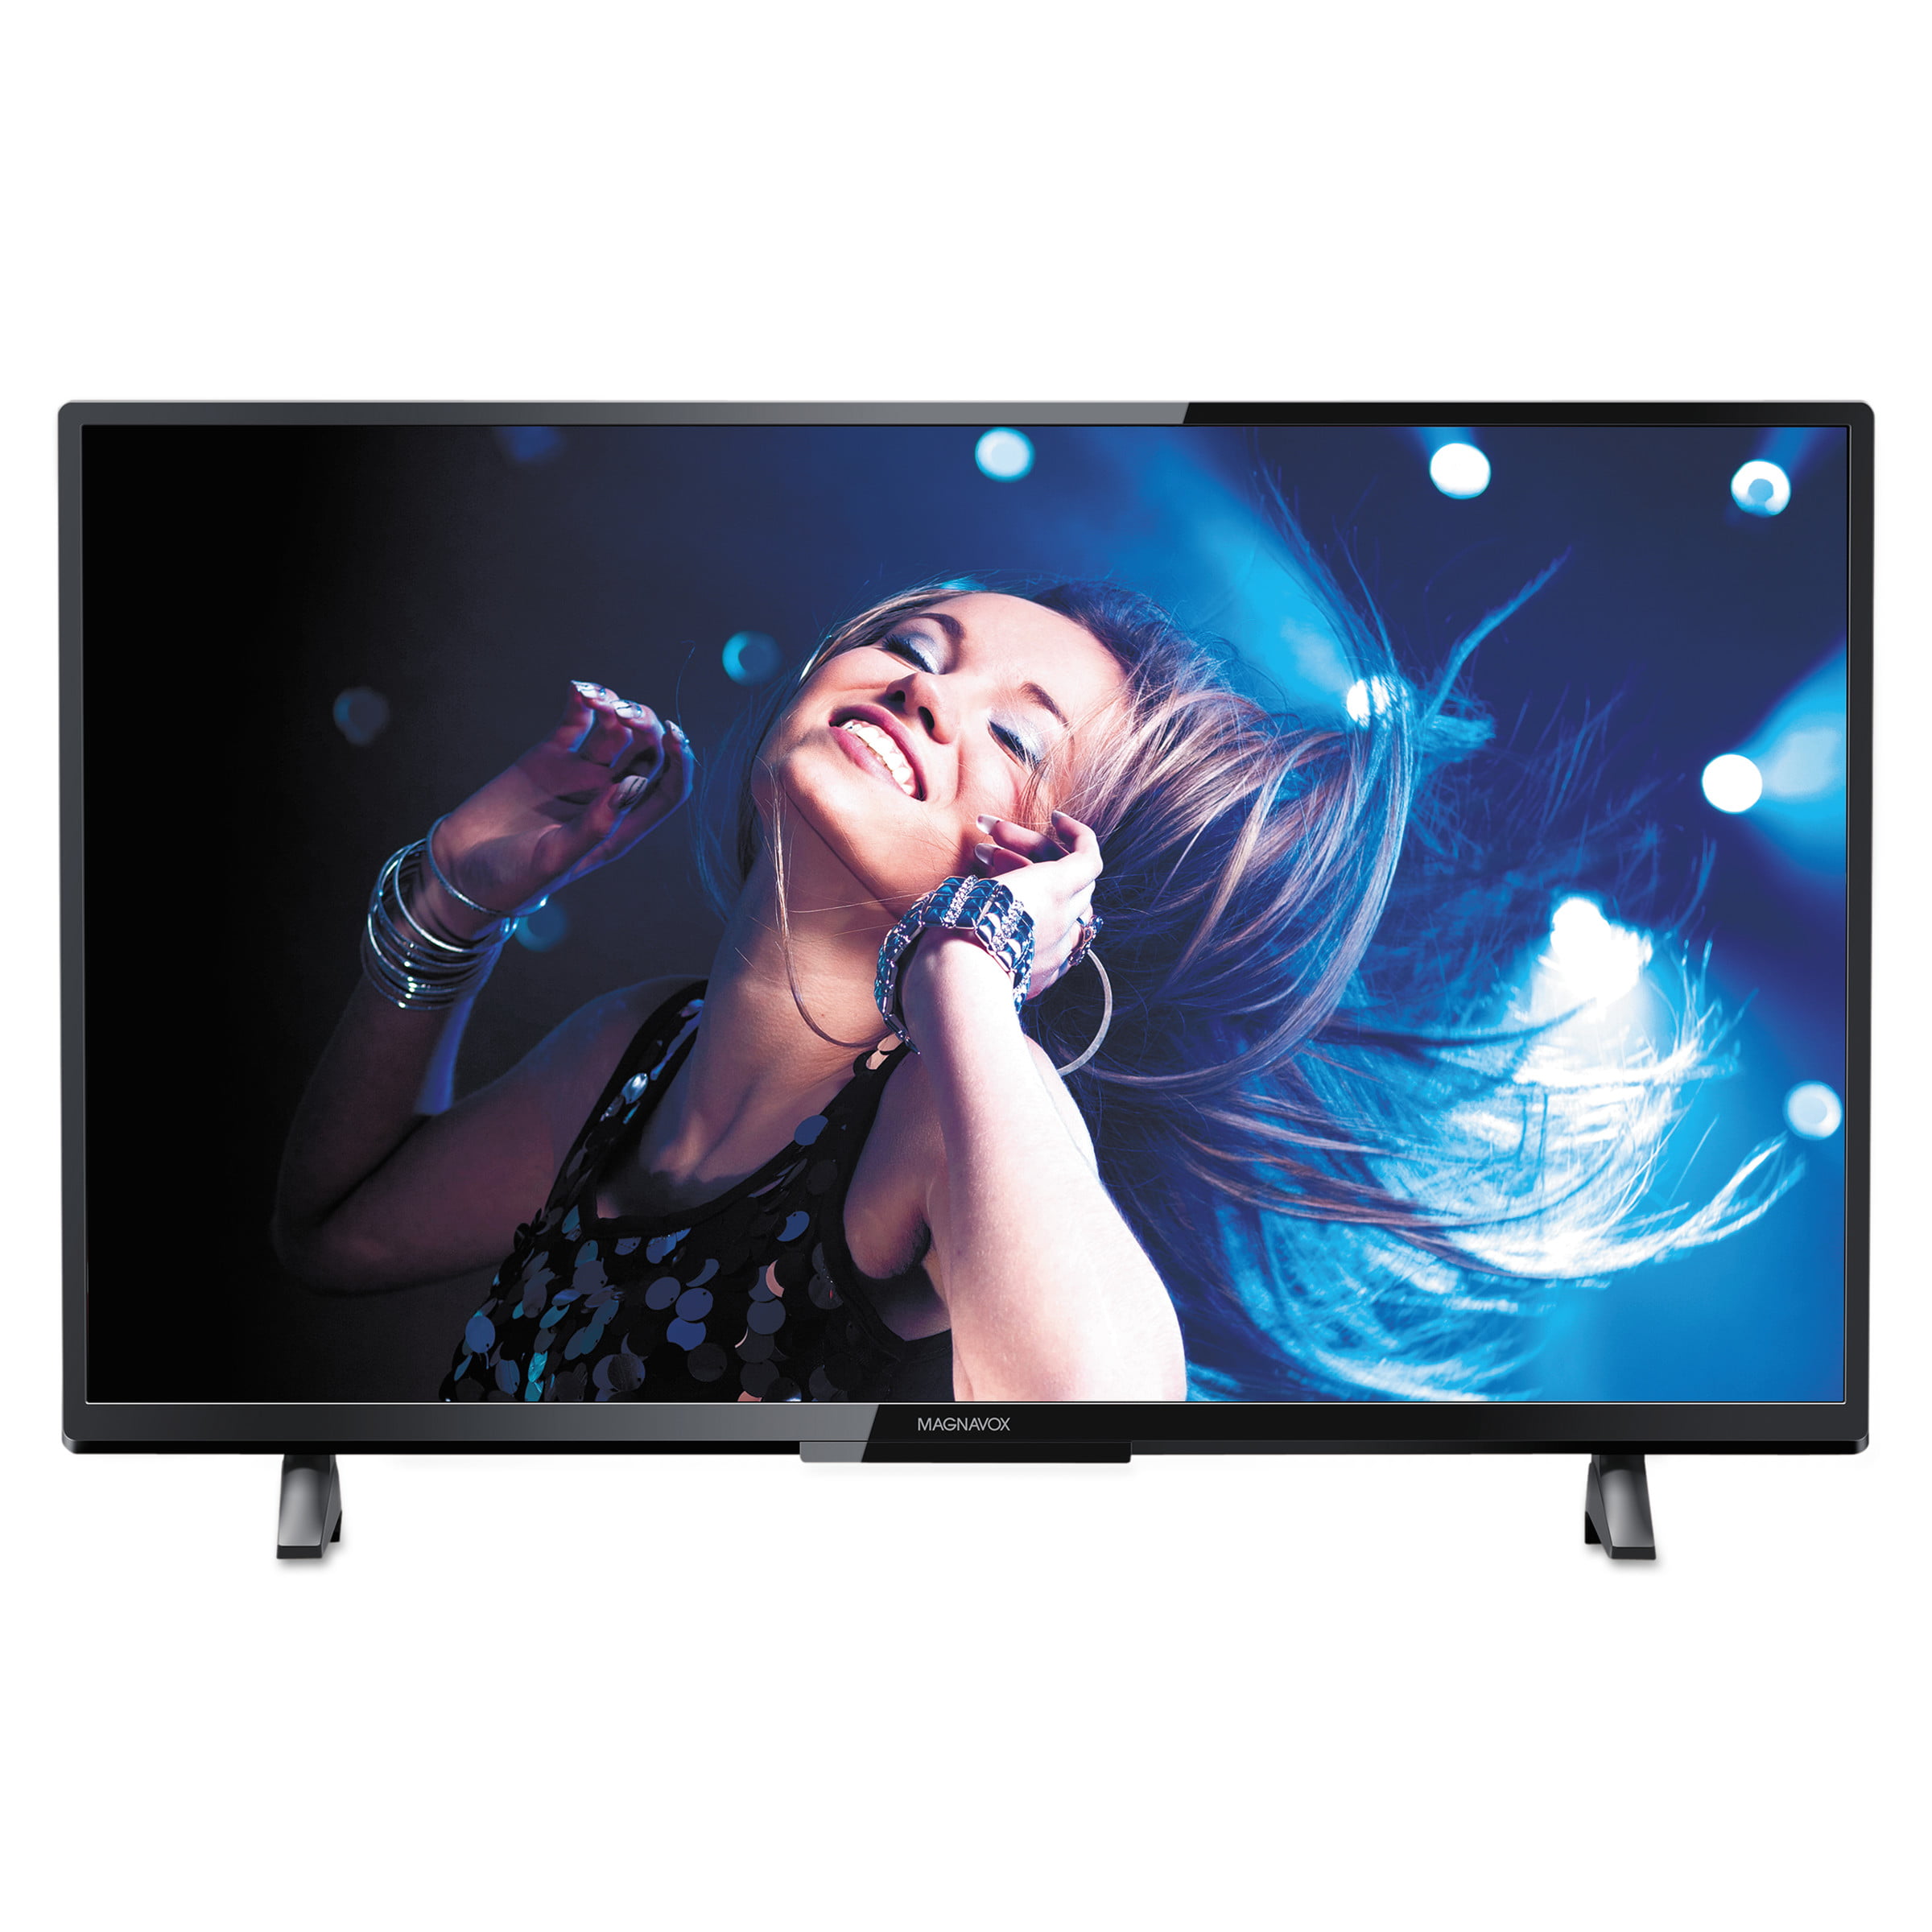 Magnavox LED LCD TV, 1080p - Walmart.com